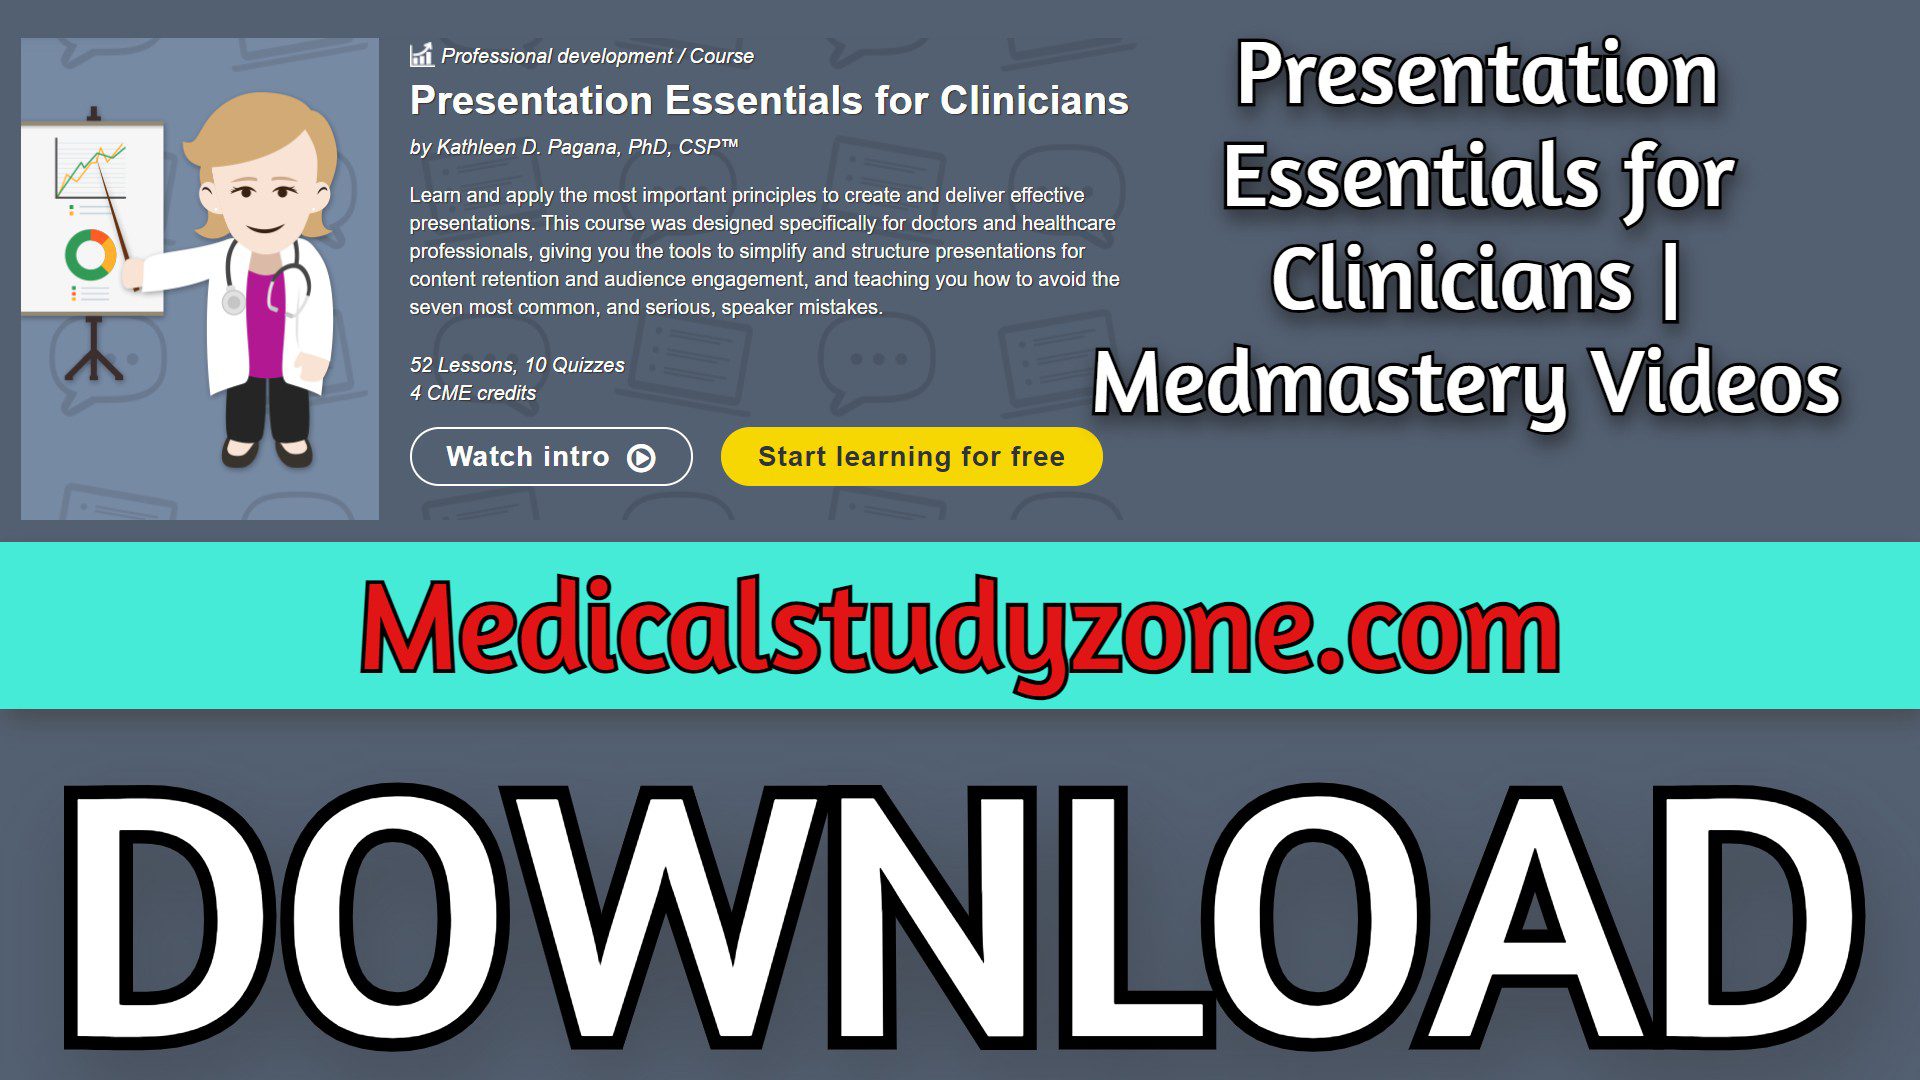 Presentation Essentials for Clinicians | Medmastery 2023 Videos Free Download